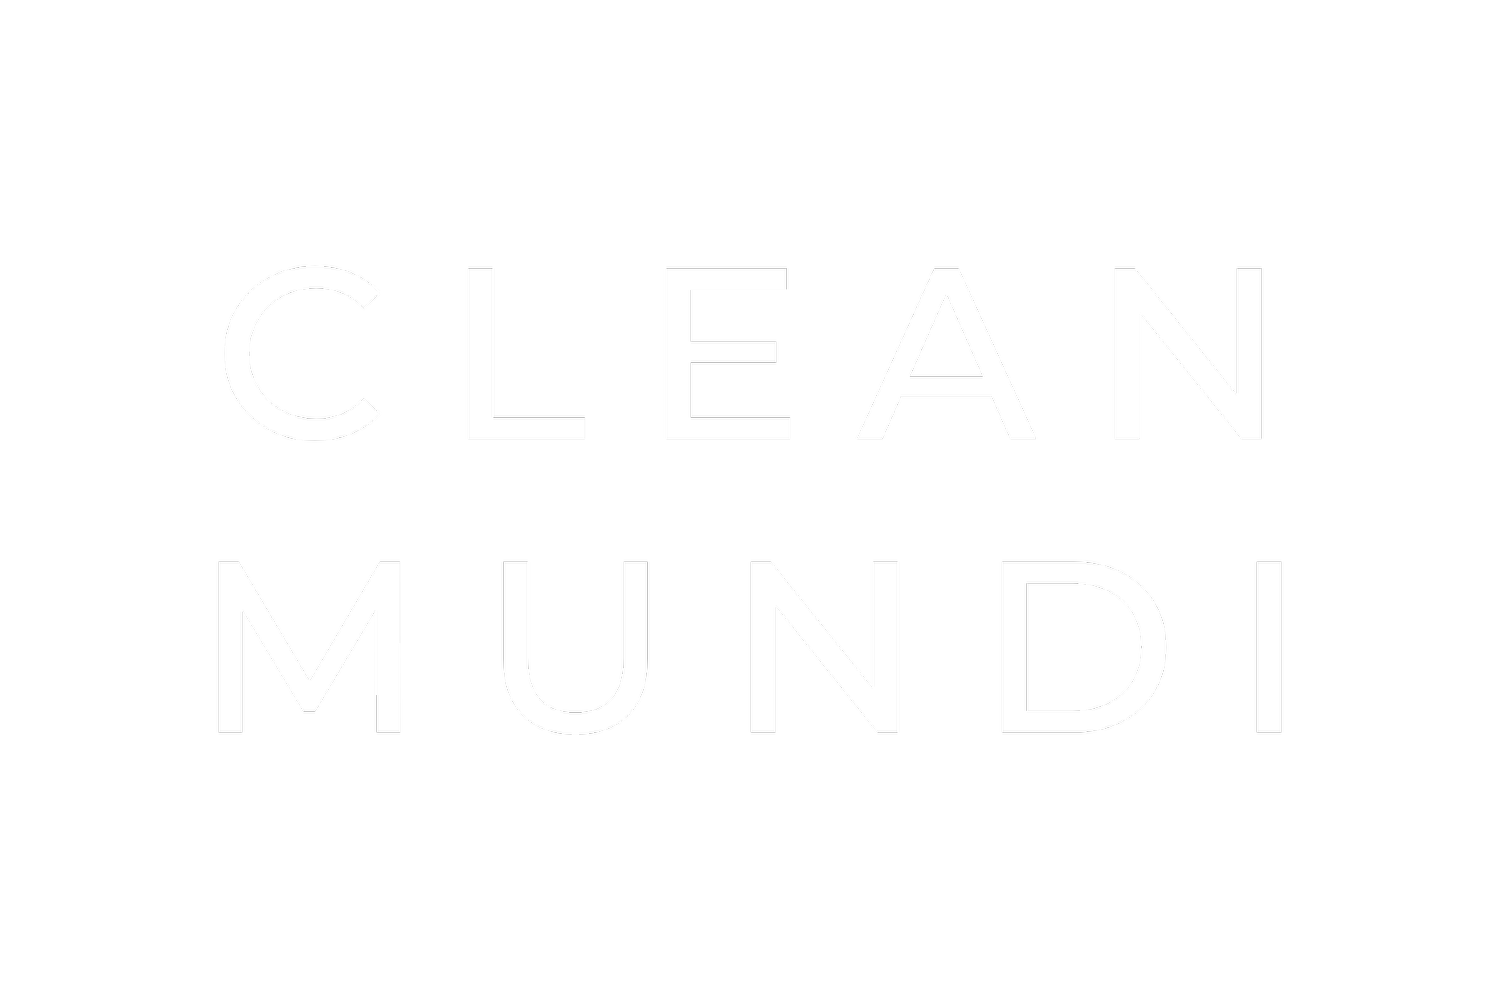 CLEAN MUNDI